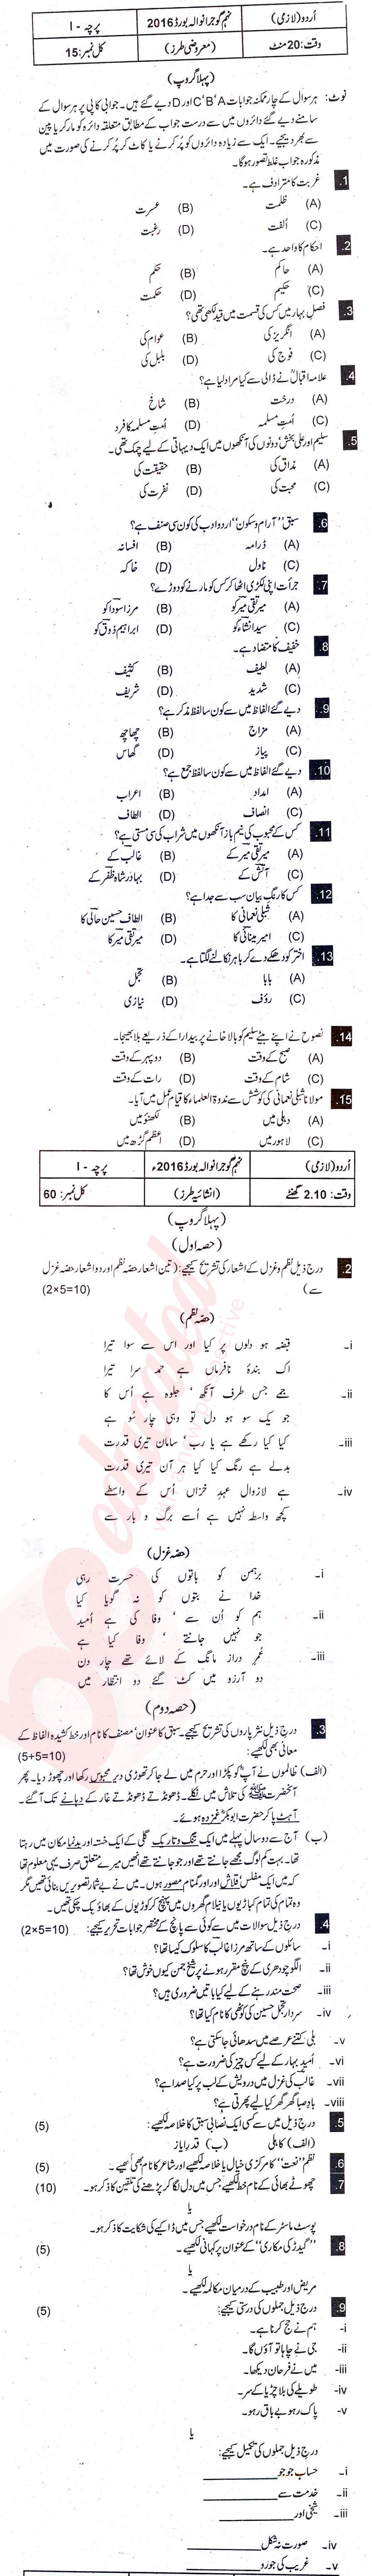 Urdu 9th class Past Paper Group 1 BISE Gujranwala 2016